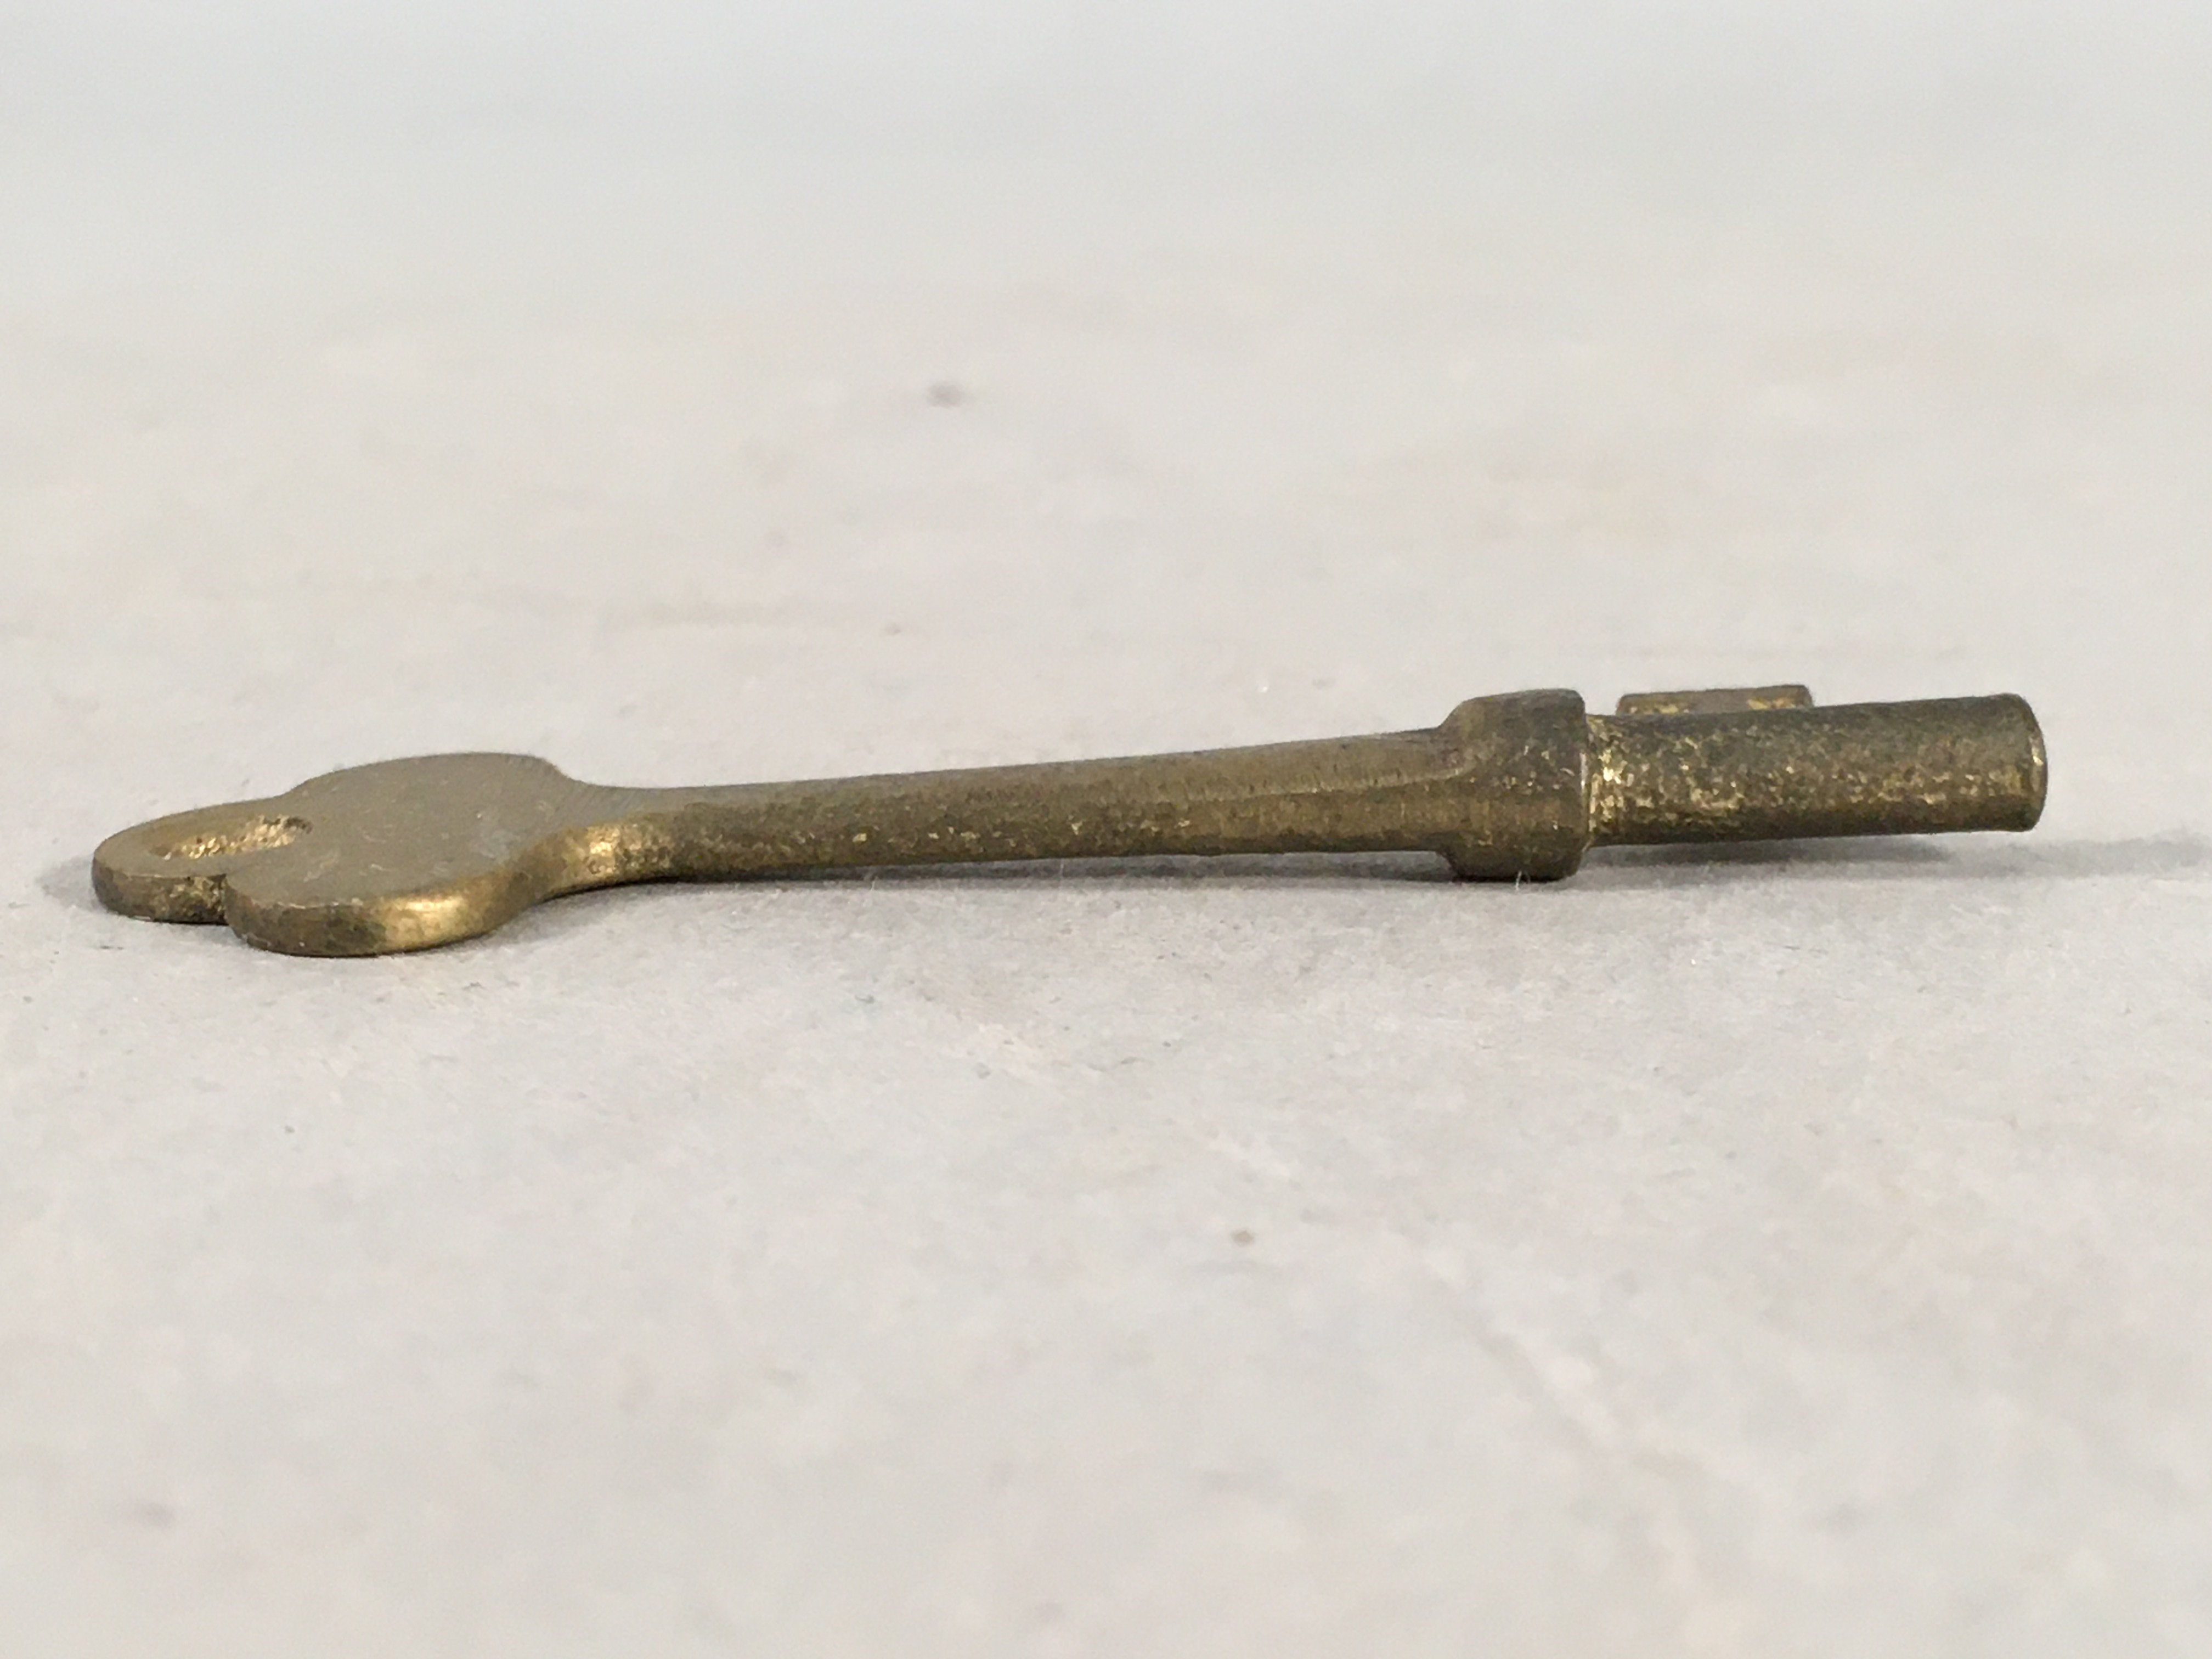 Japanese Metal Key Vtg C1930 Brass Gold 3 leaves JK28